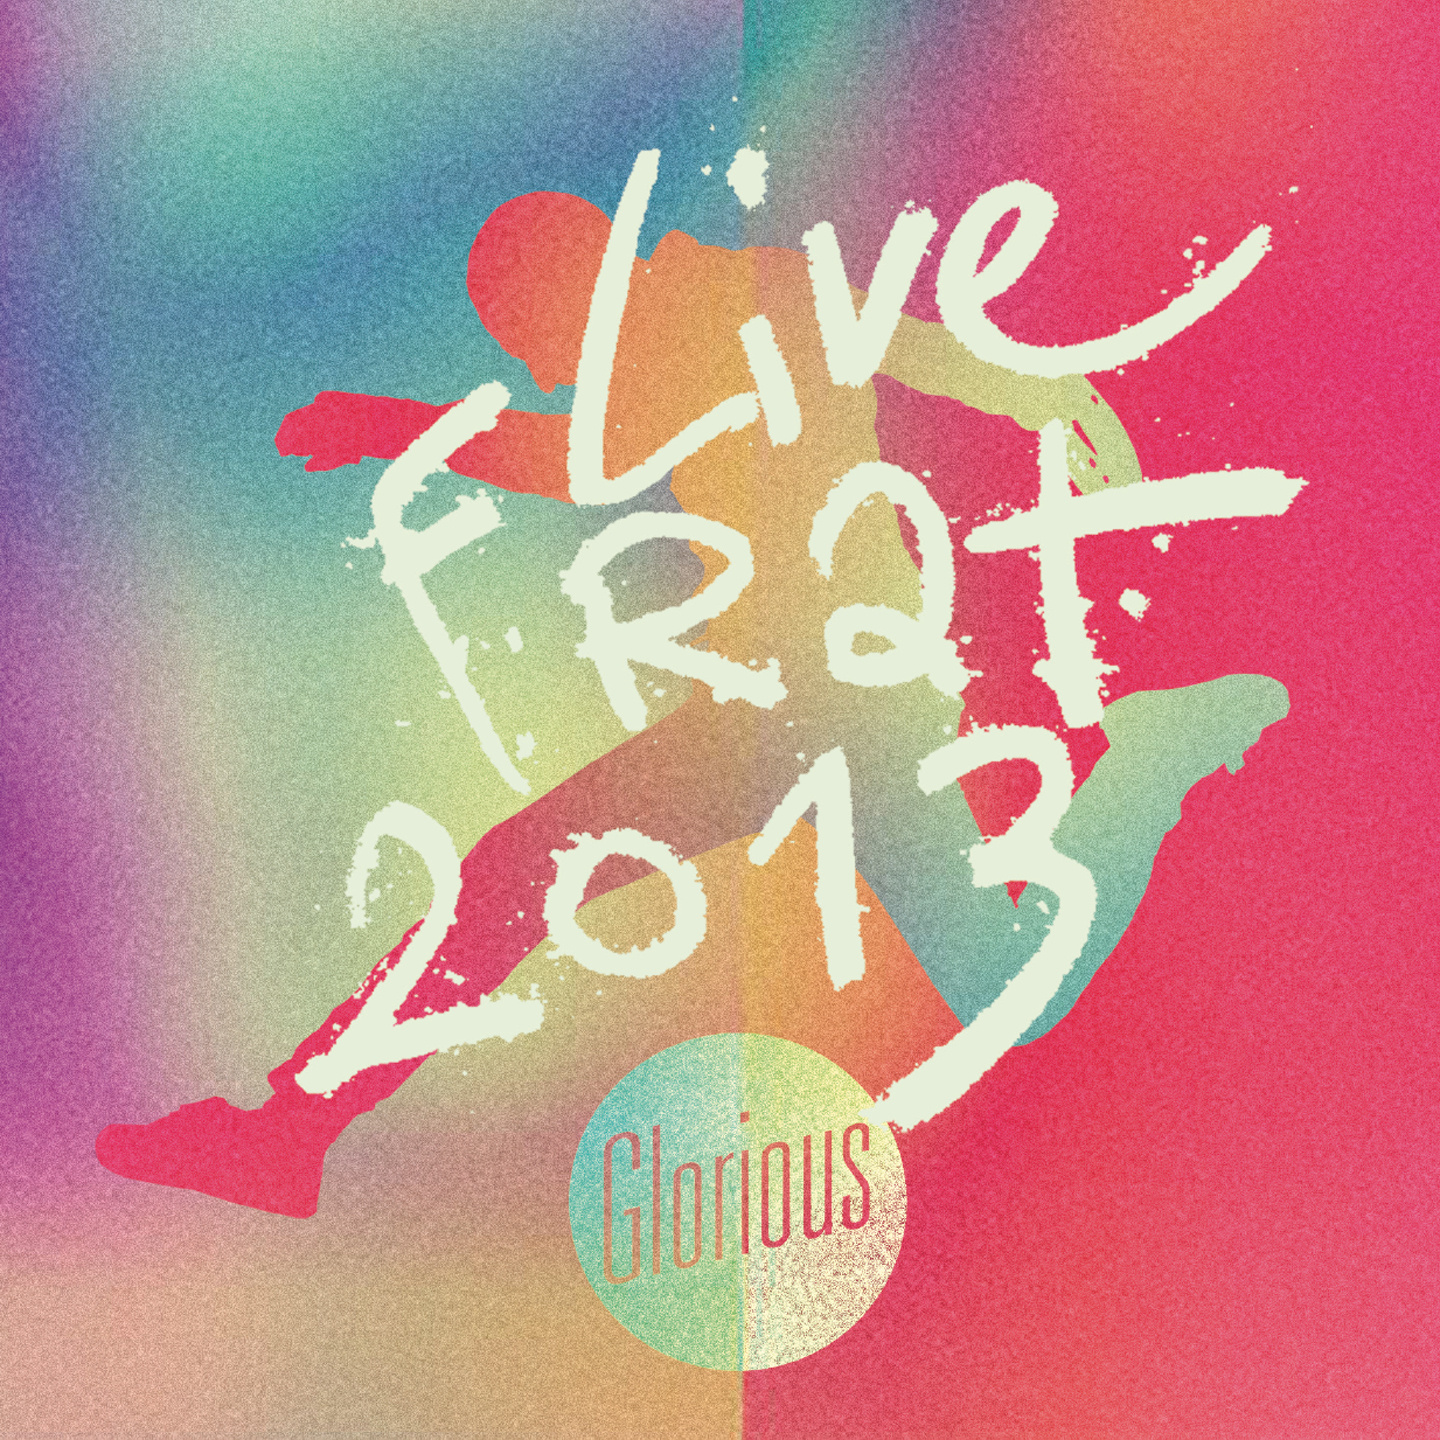 Glorious - Live Frat 2013